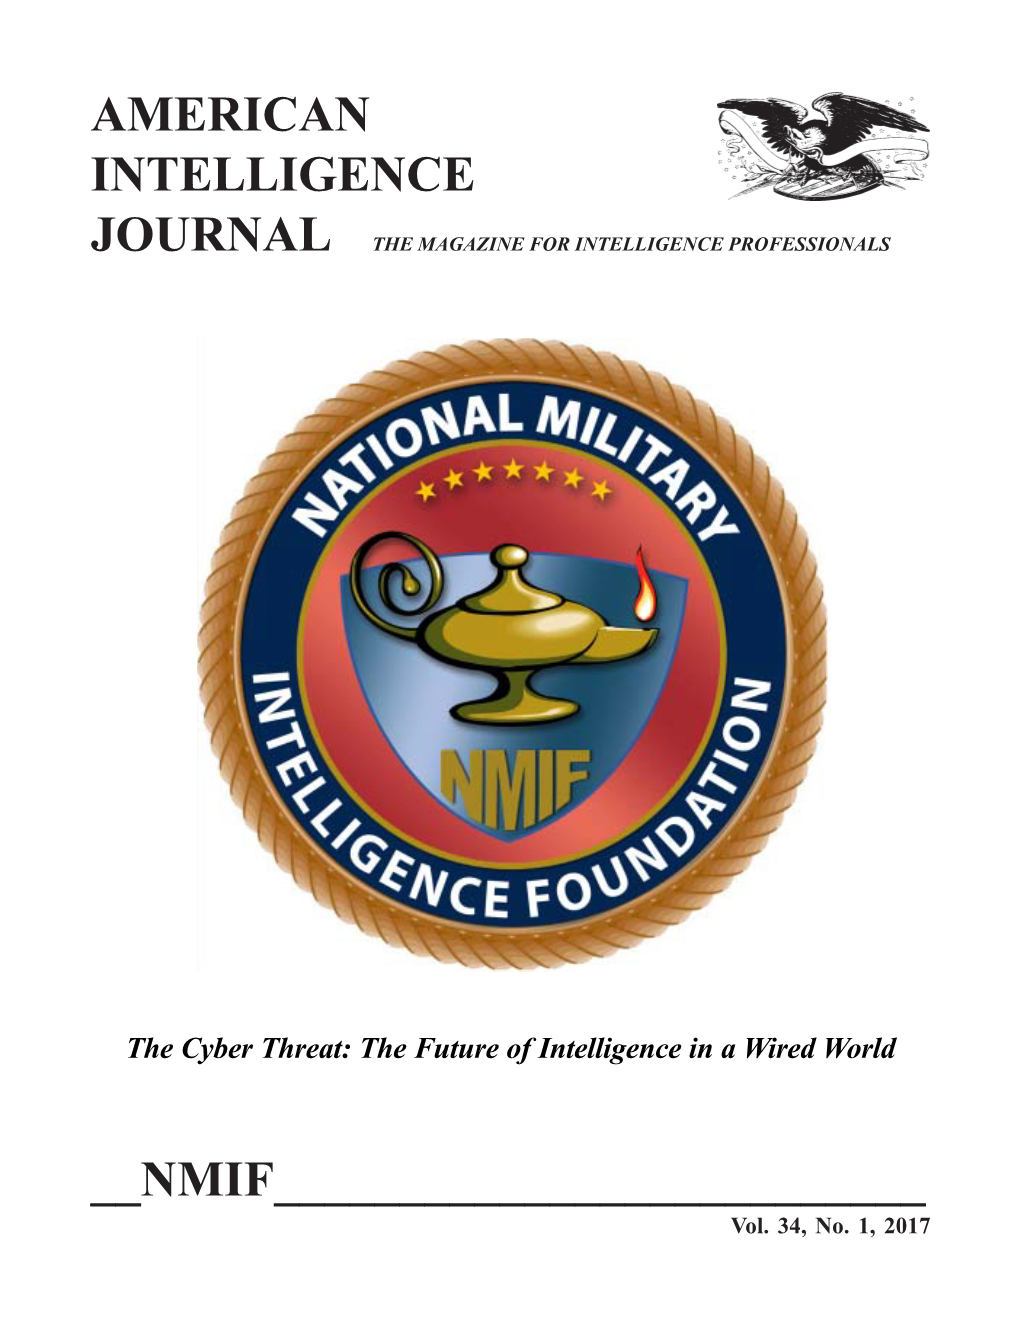 American Intelligence Journal Vol 34